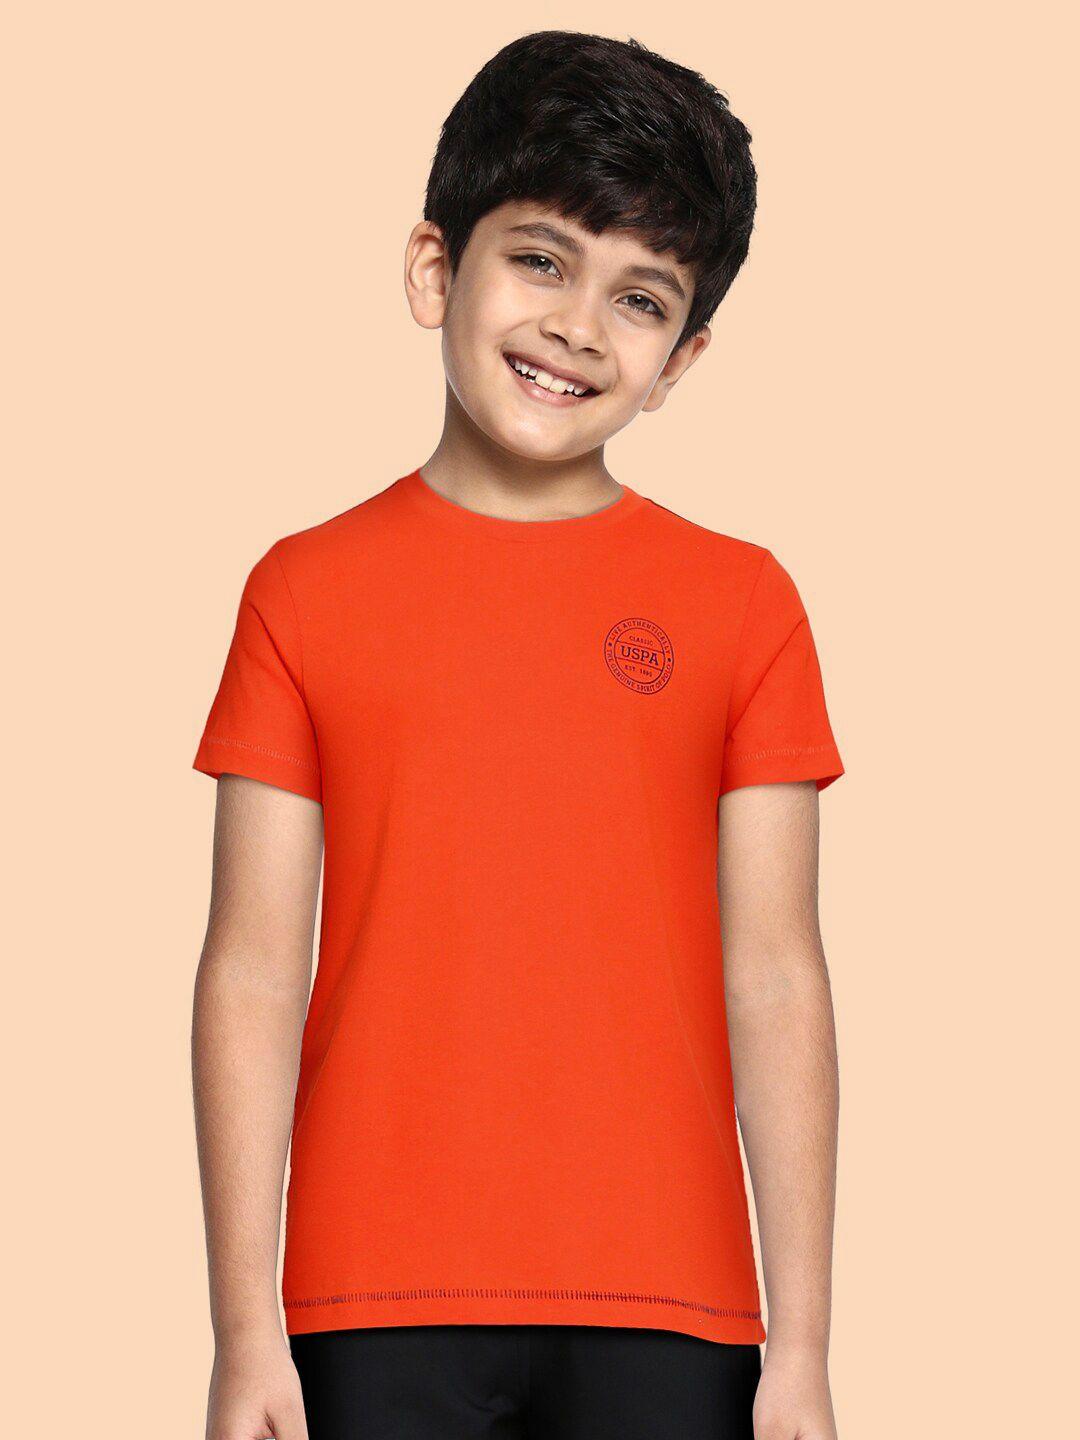 u.s. polo assn. kids boys orange pure cotton lounge t-shirt